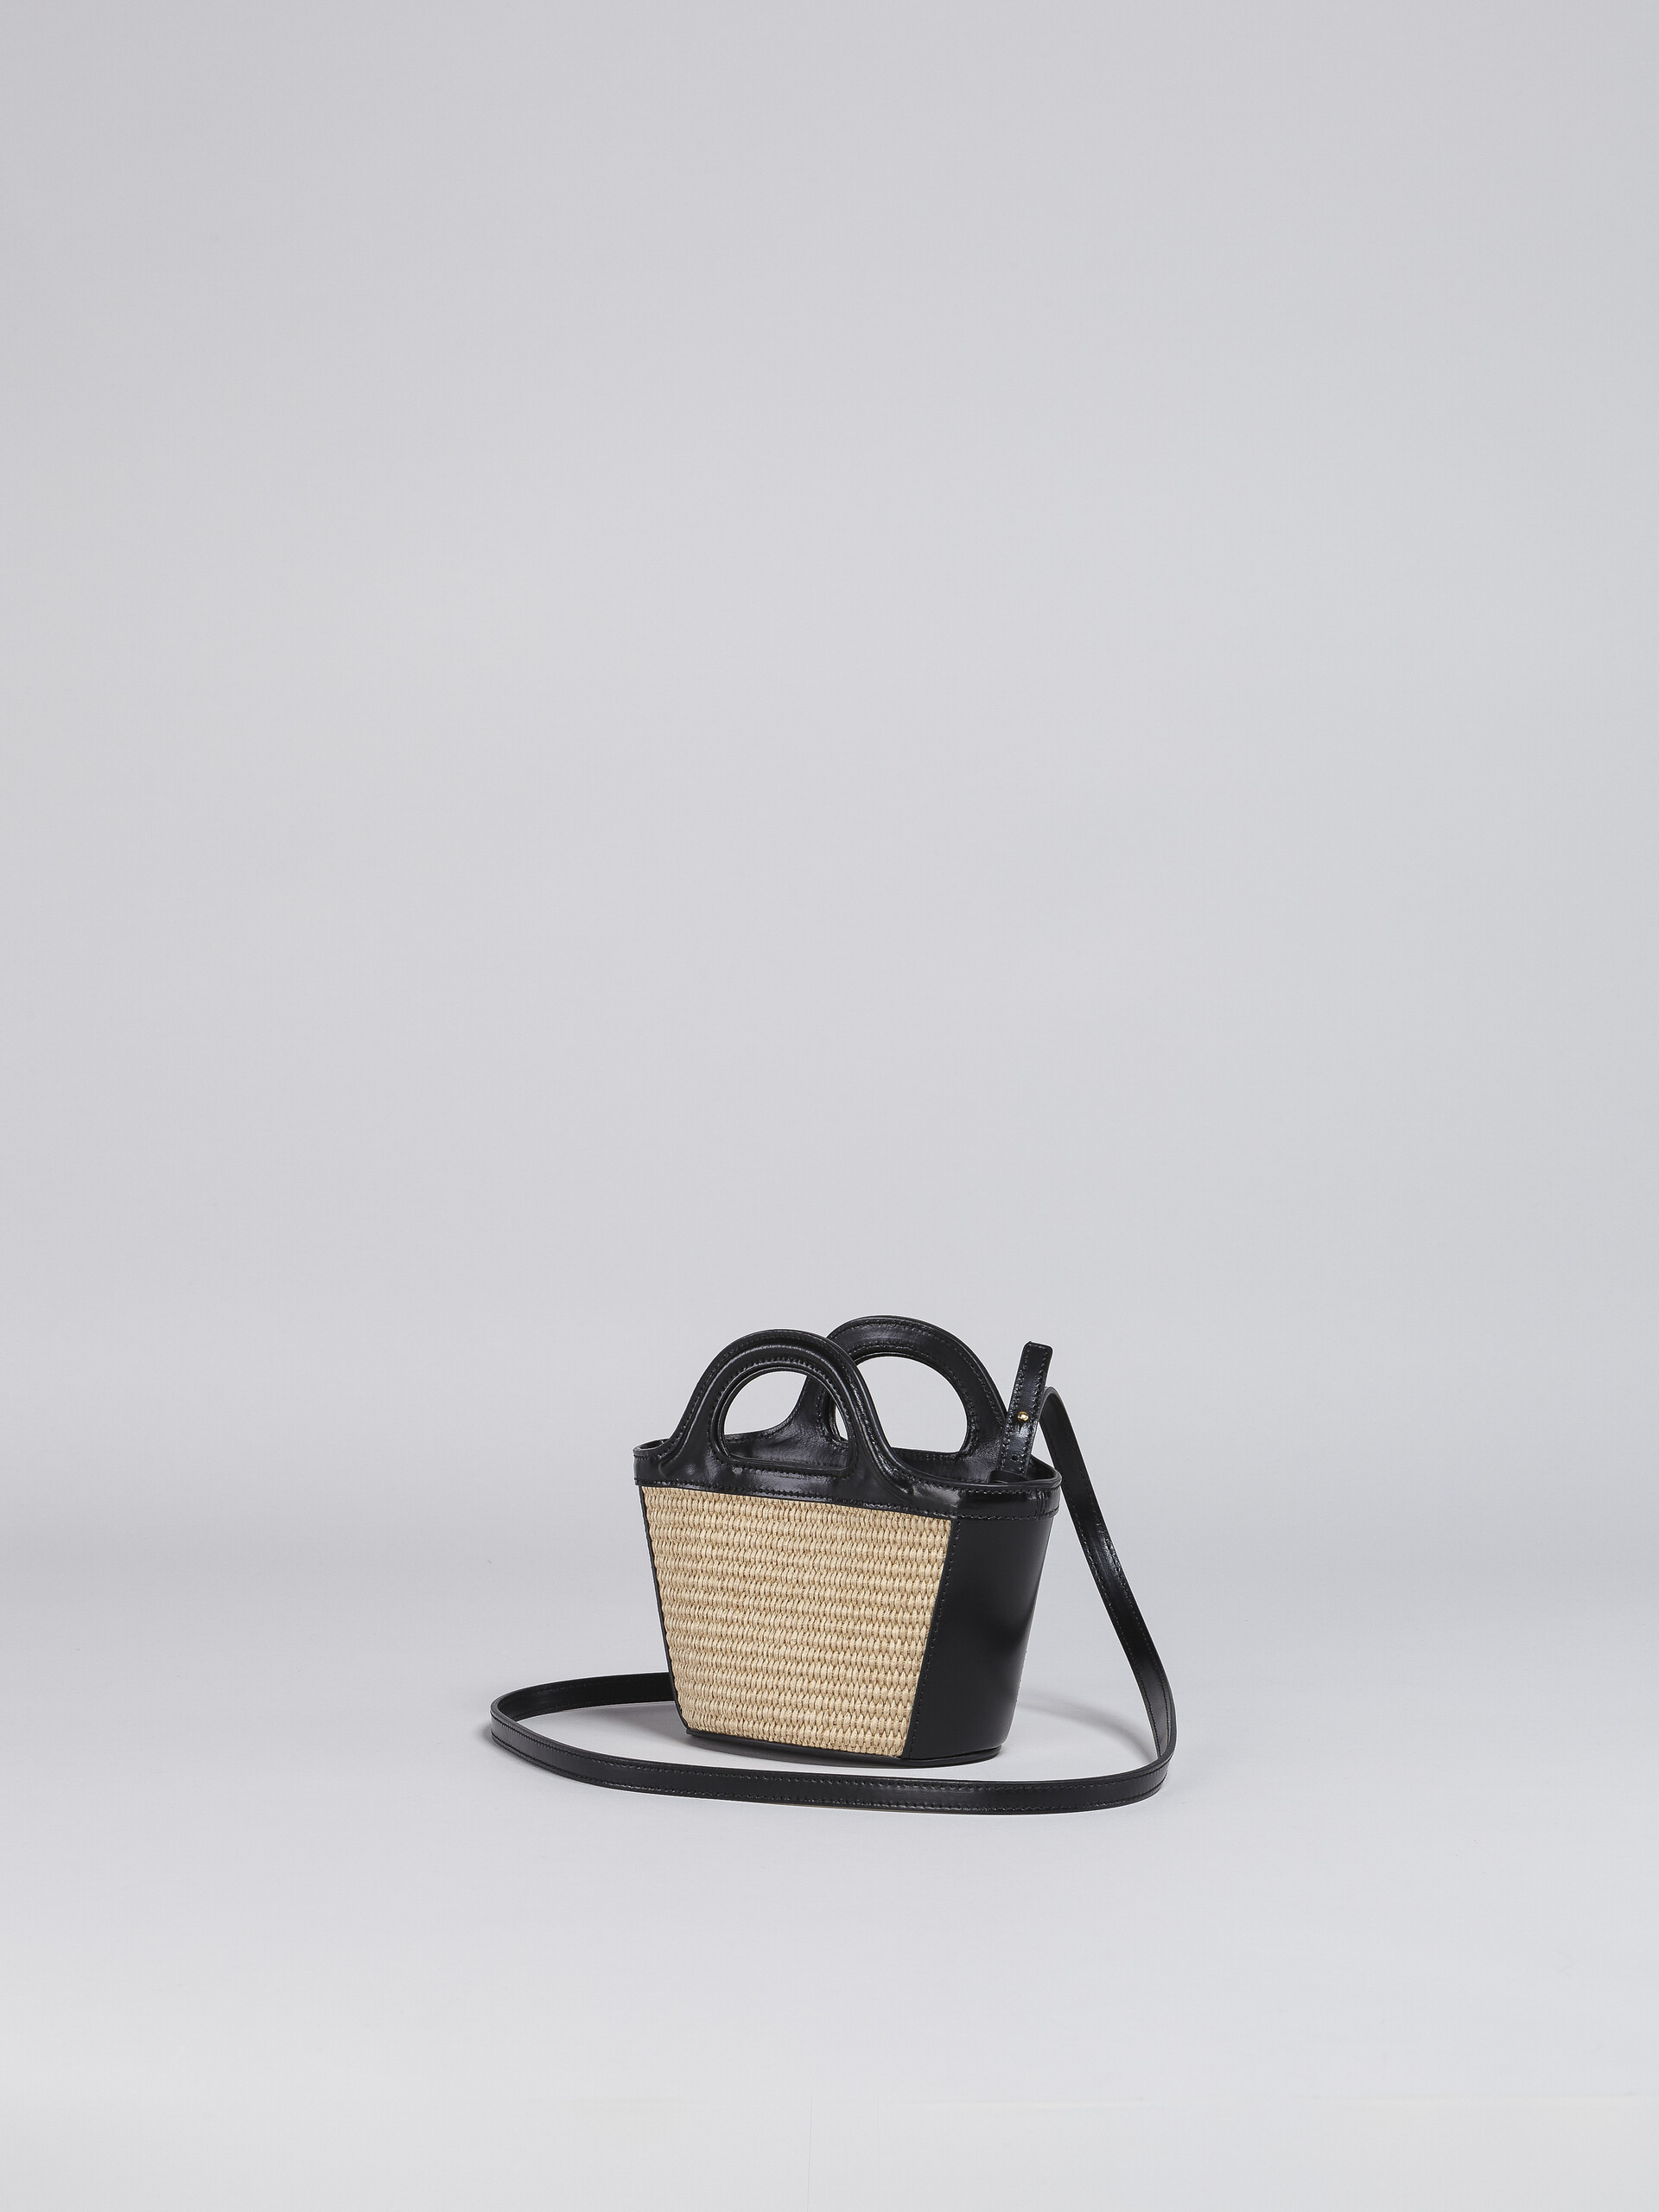 TROPICALIA micro bag in black leather and raffia - Handbag - Image 2